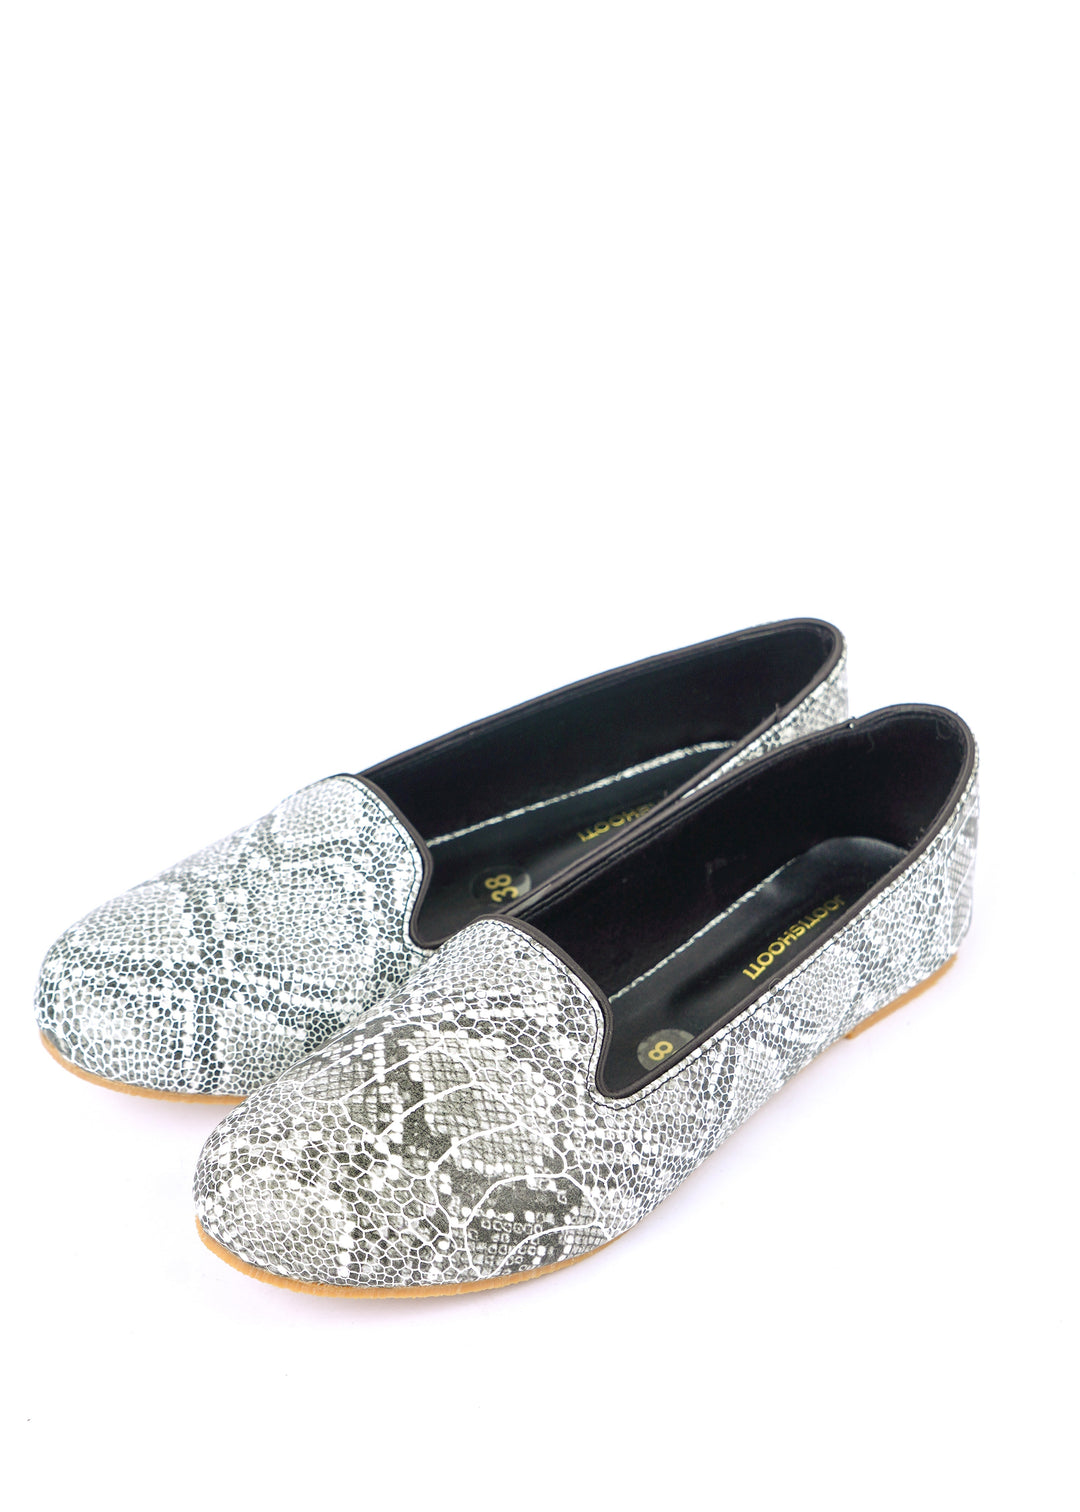 Monochrome Textured Loafers - Jooti Shooti